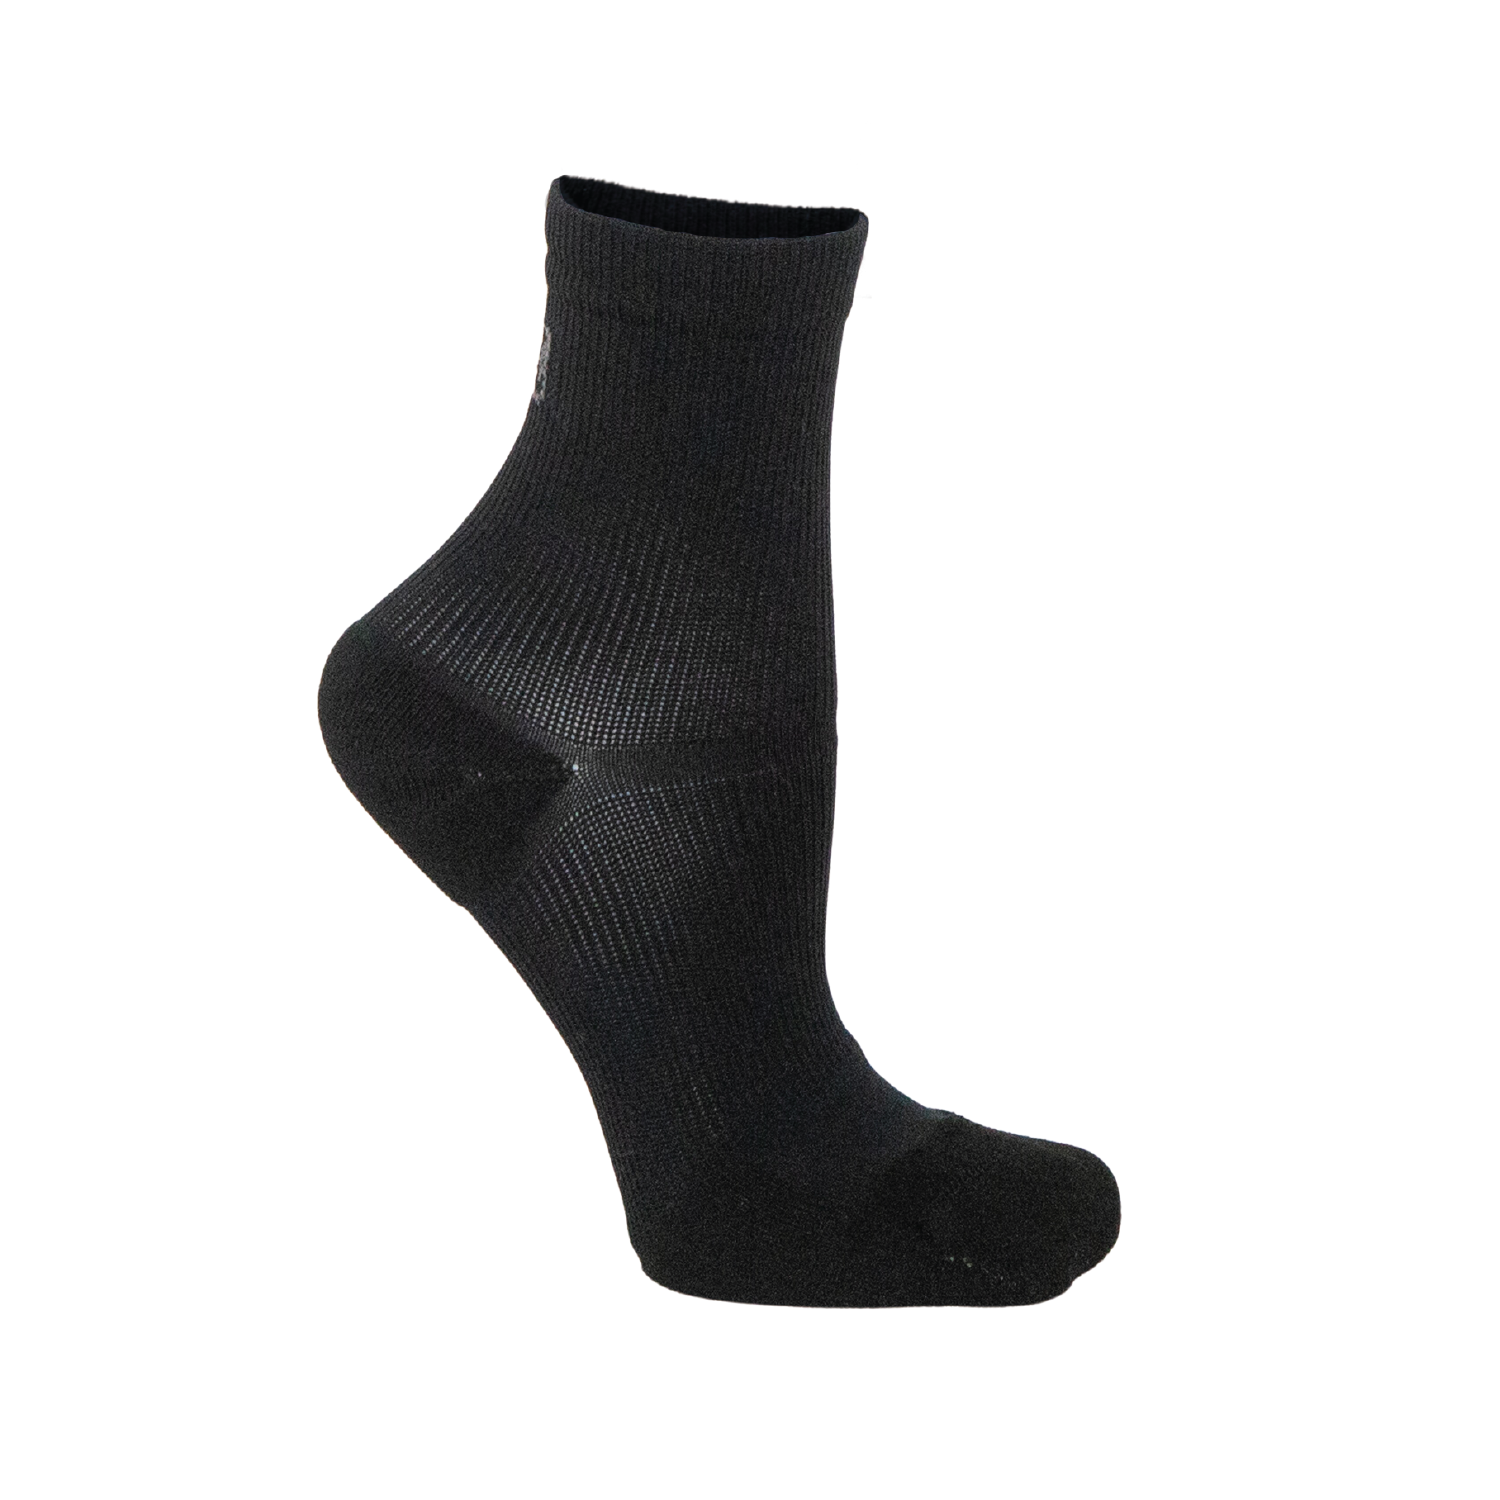 Dance Socks 2 Pack - Black One Size- MENS at  Men's Clothing